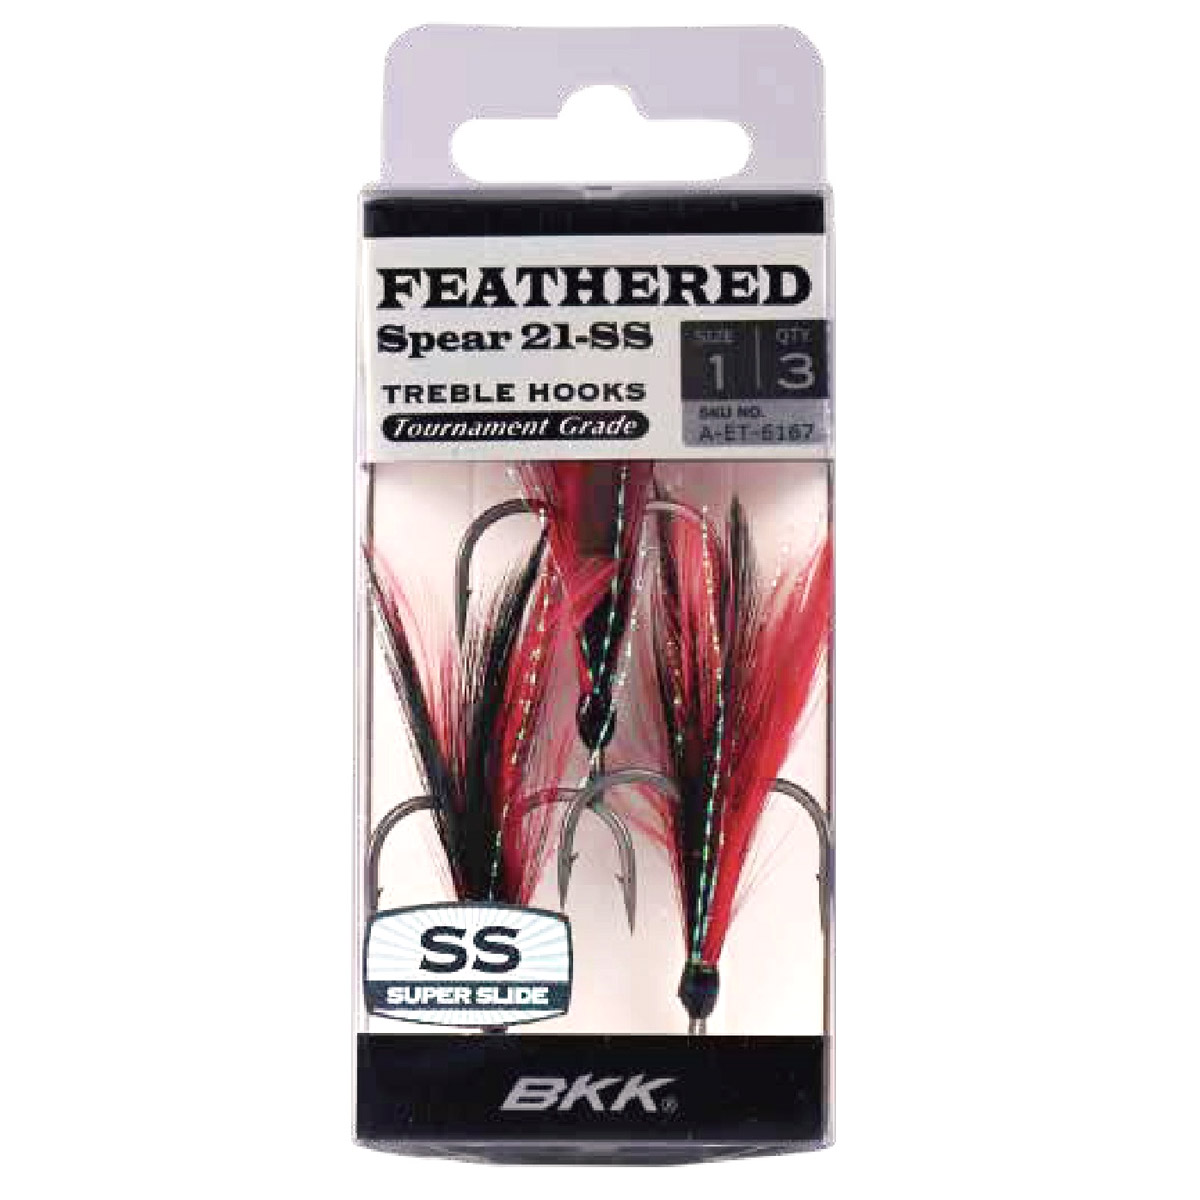 BKK Feathered Spear 21-SS Treble Hook Black & Red